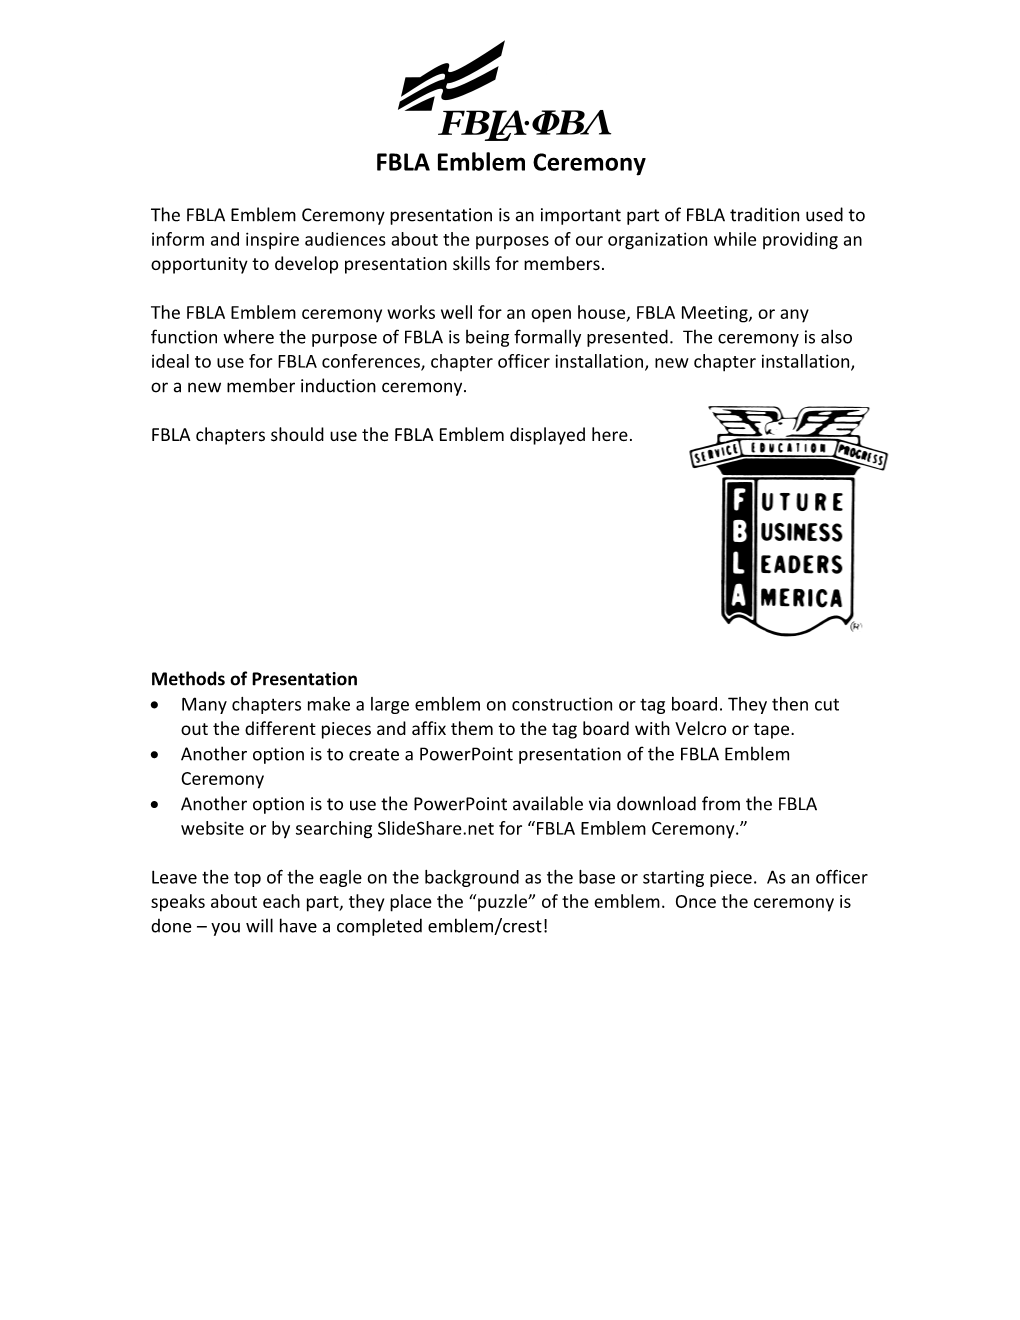 FBLA-PBL Emblem Ceremony